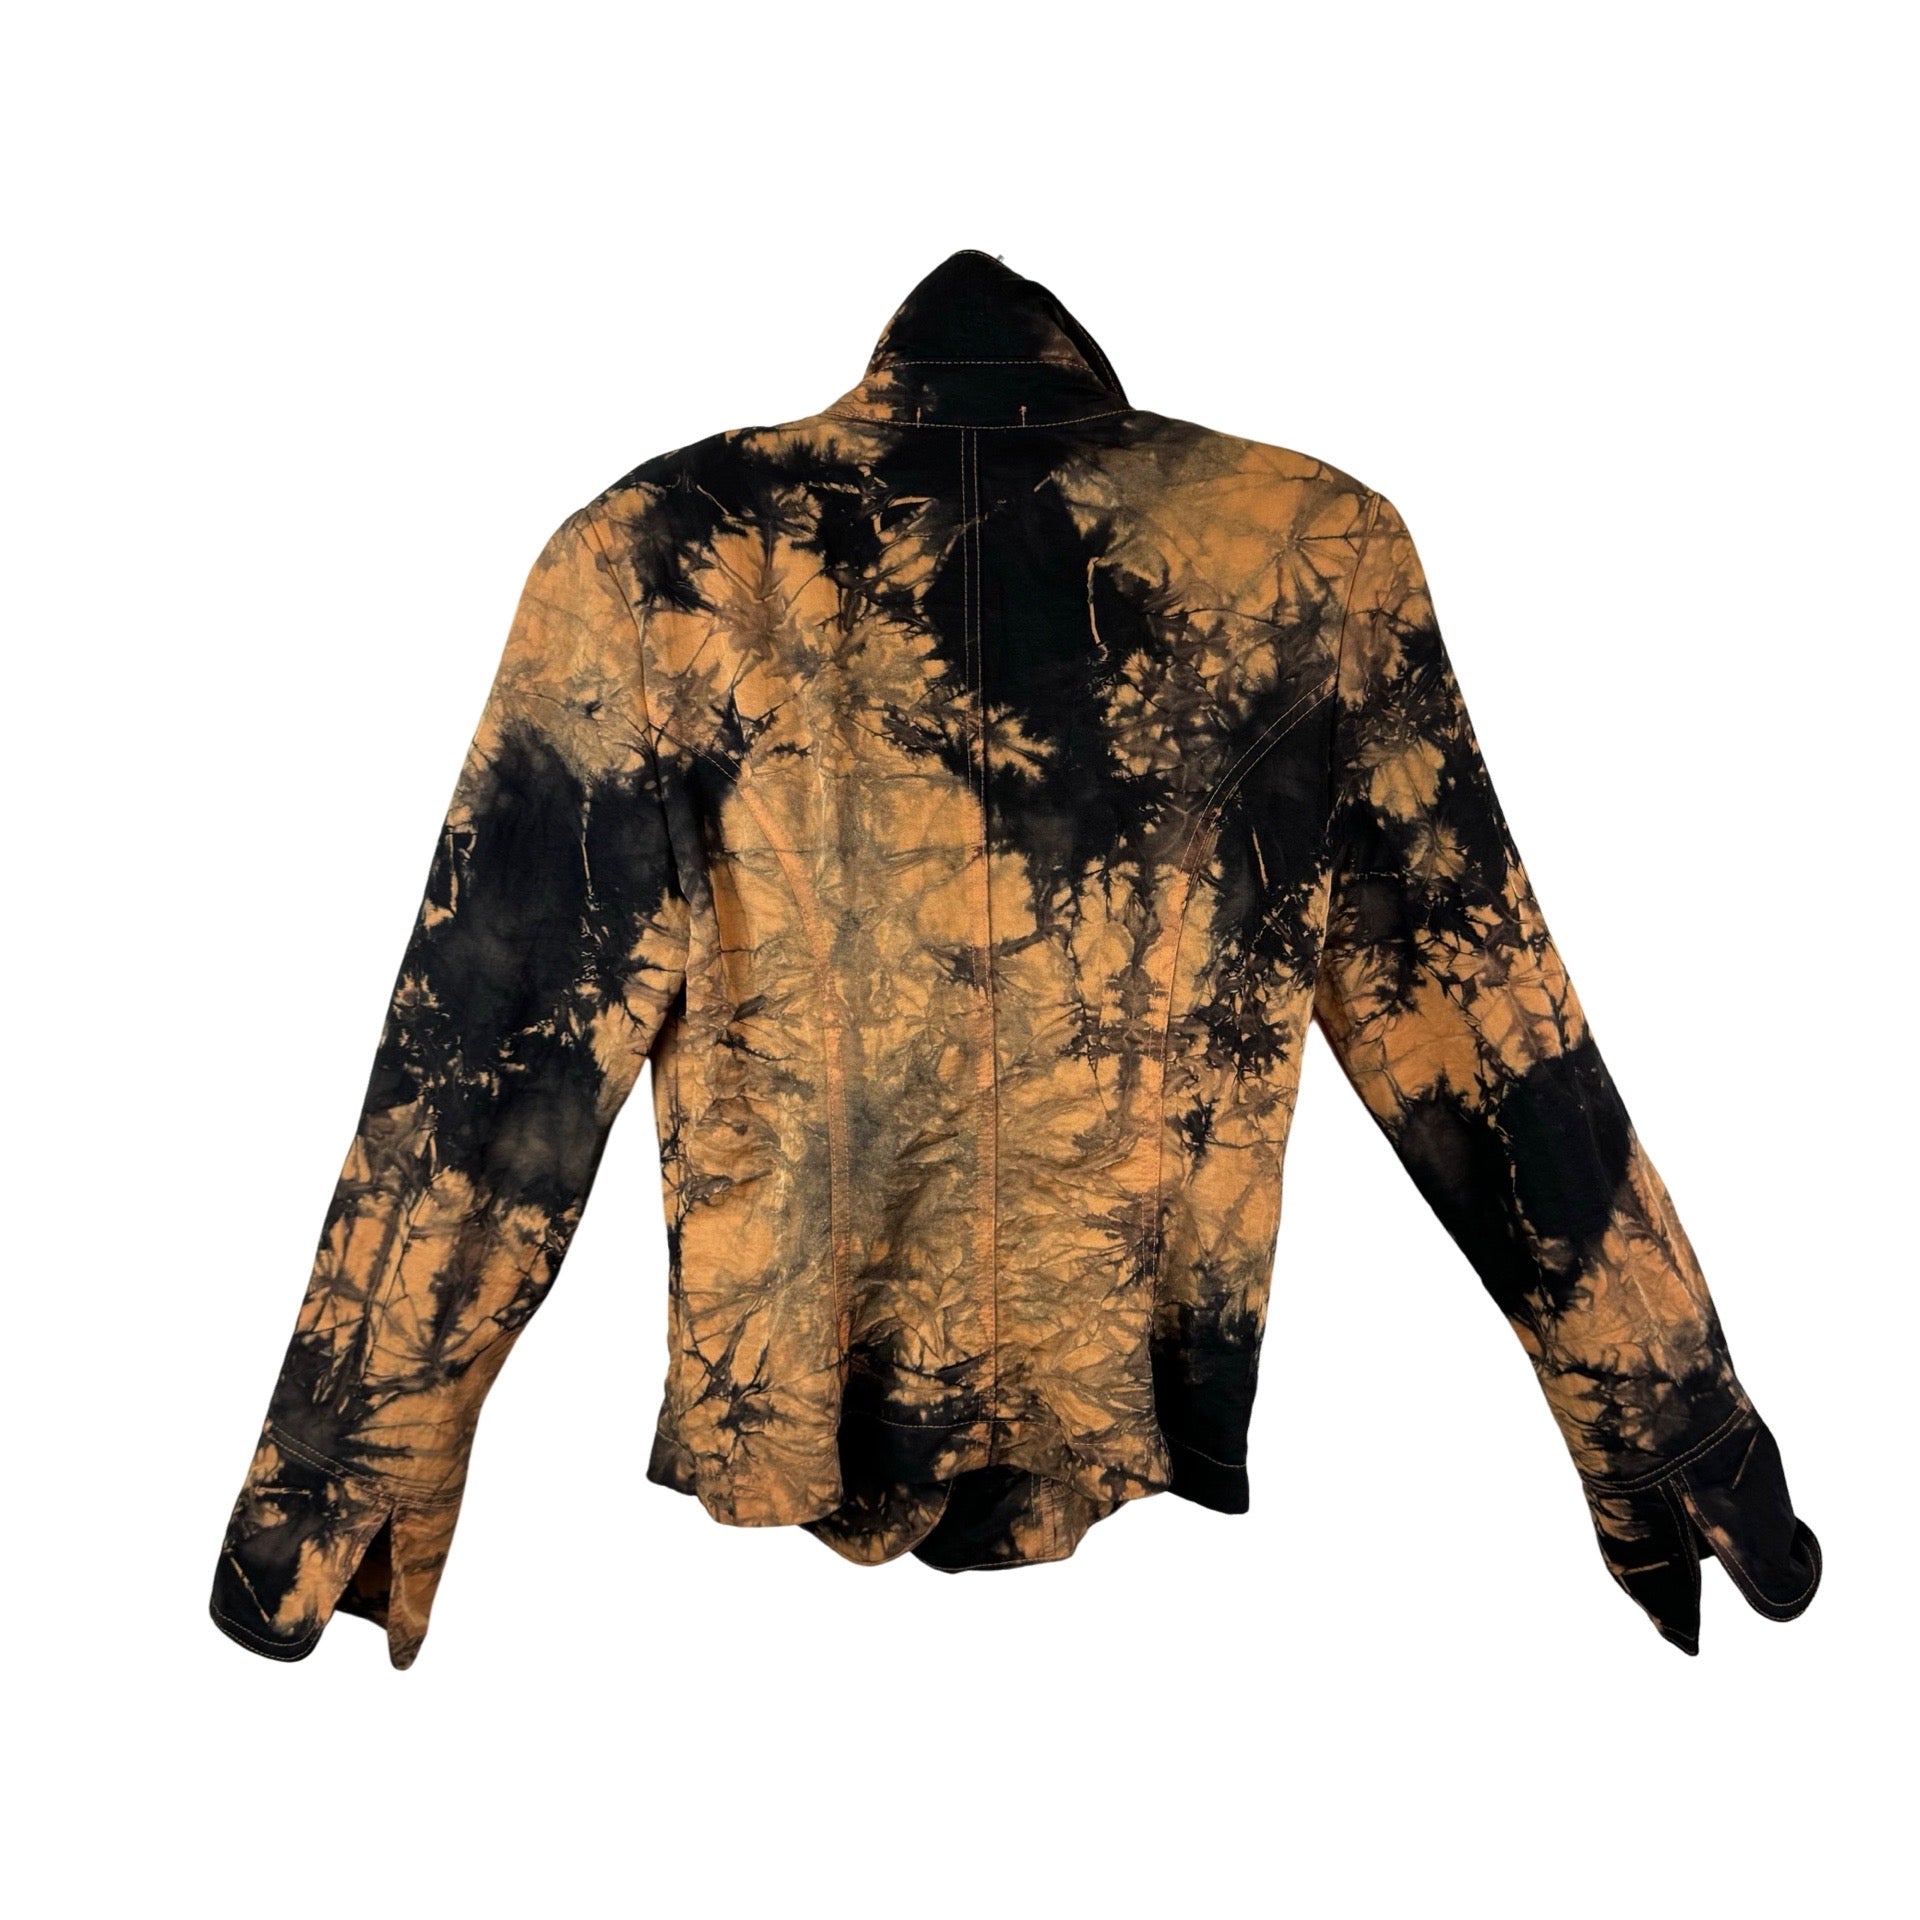 Bleach Dye Ruffled Collar Jacket